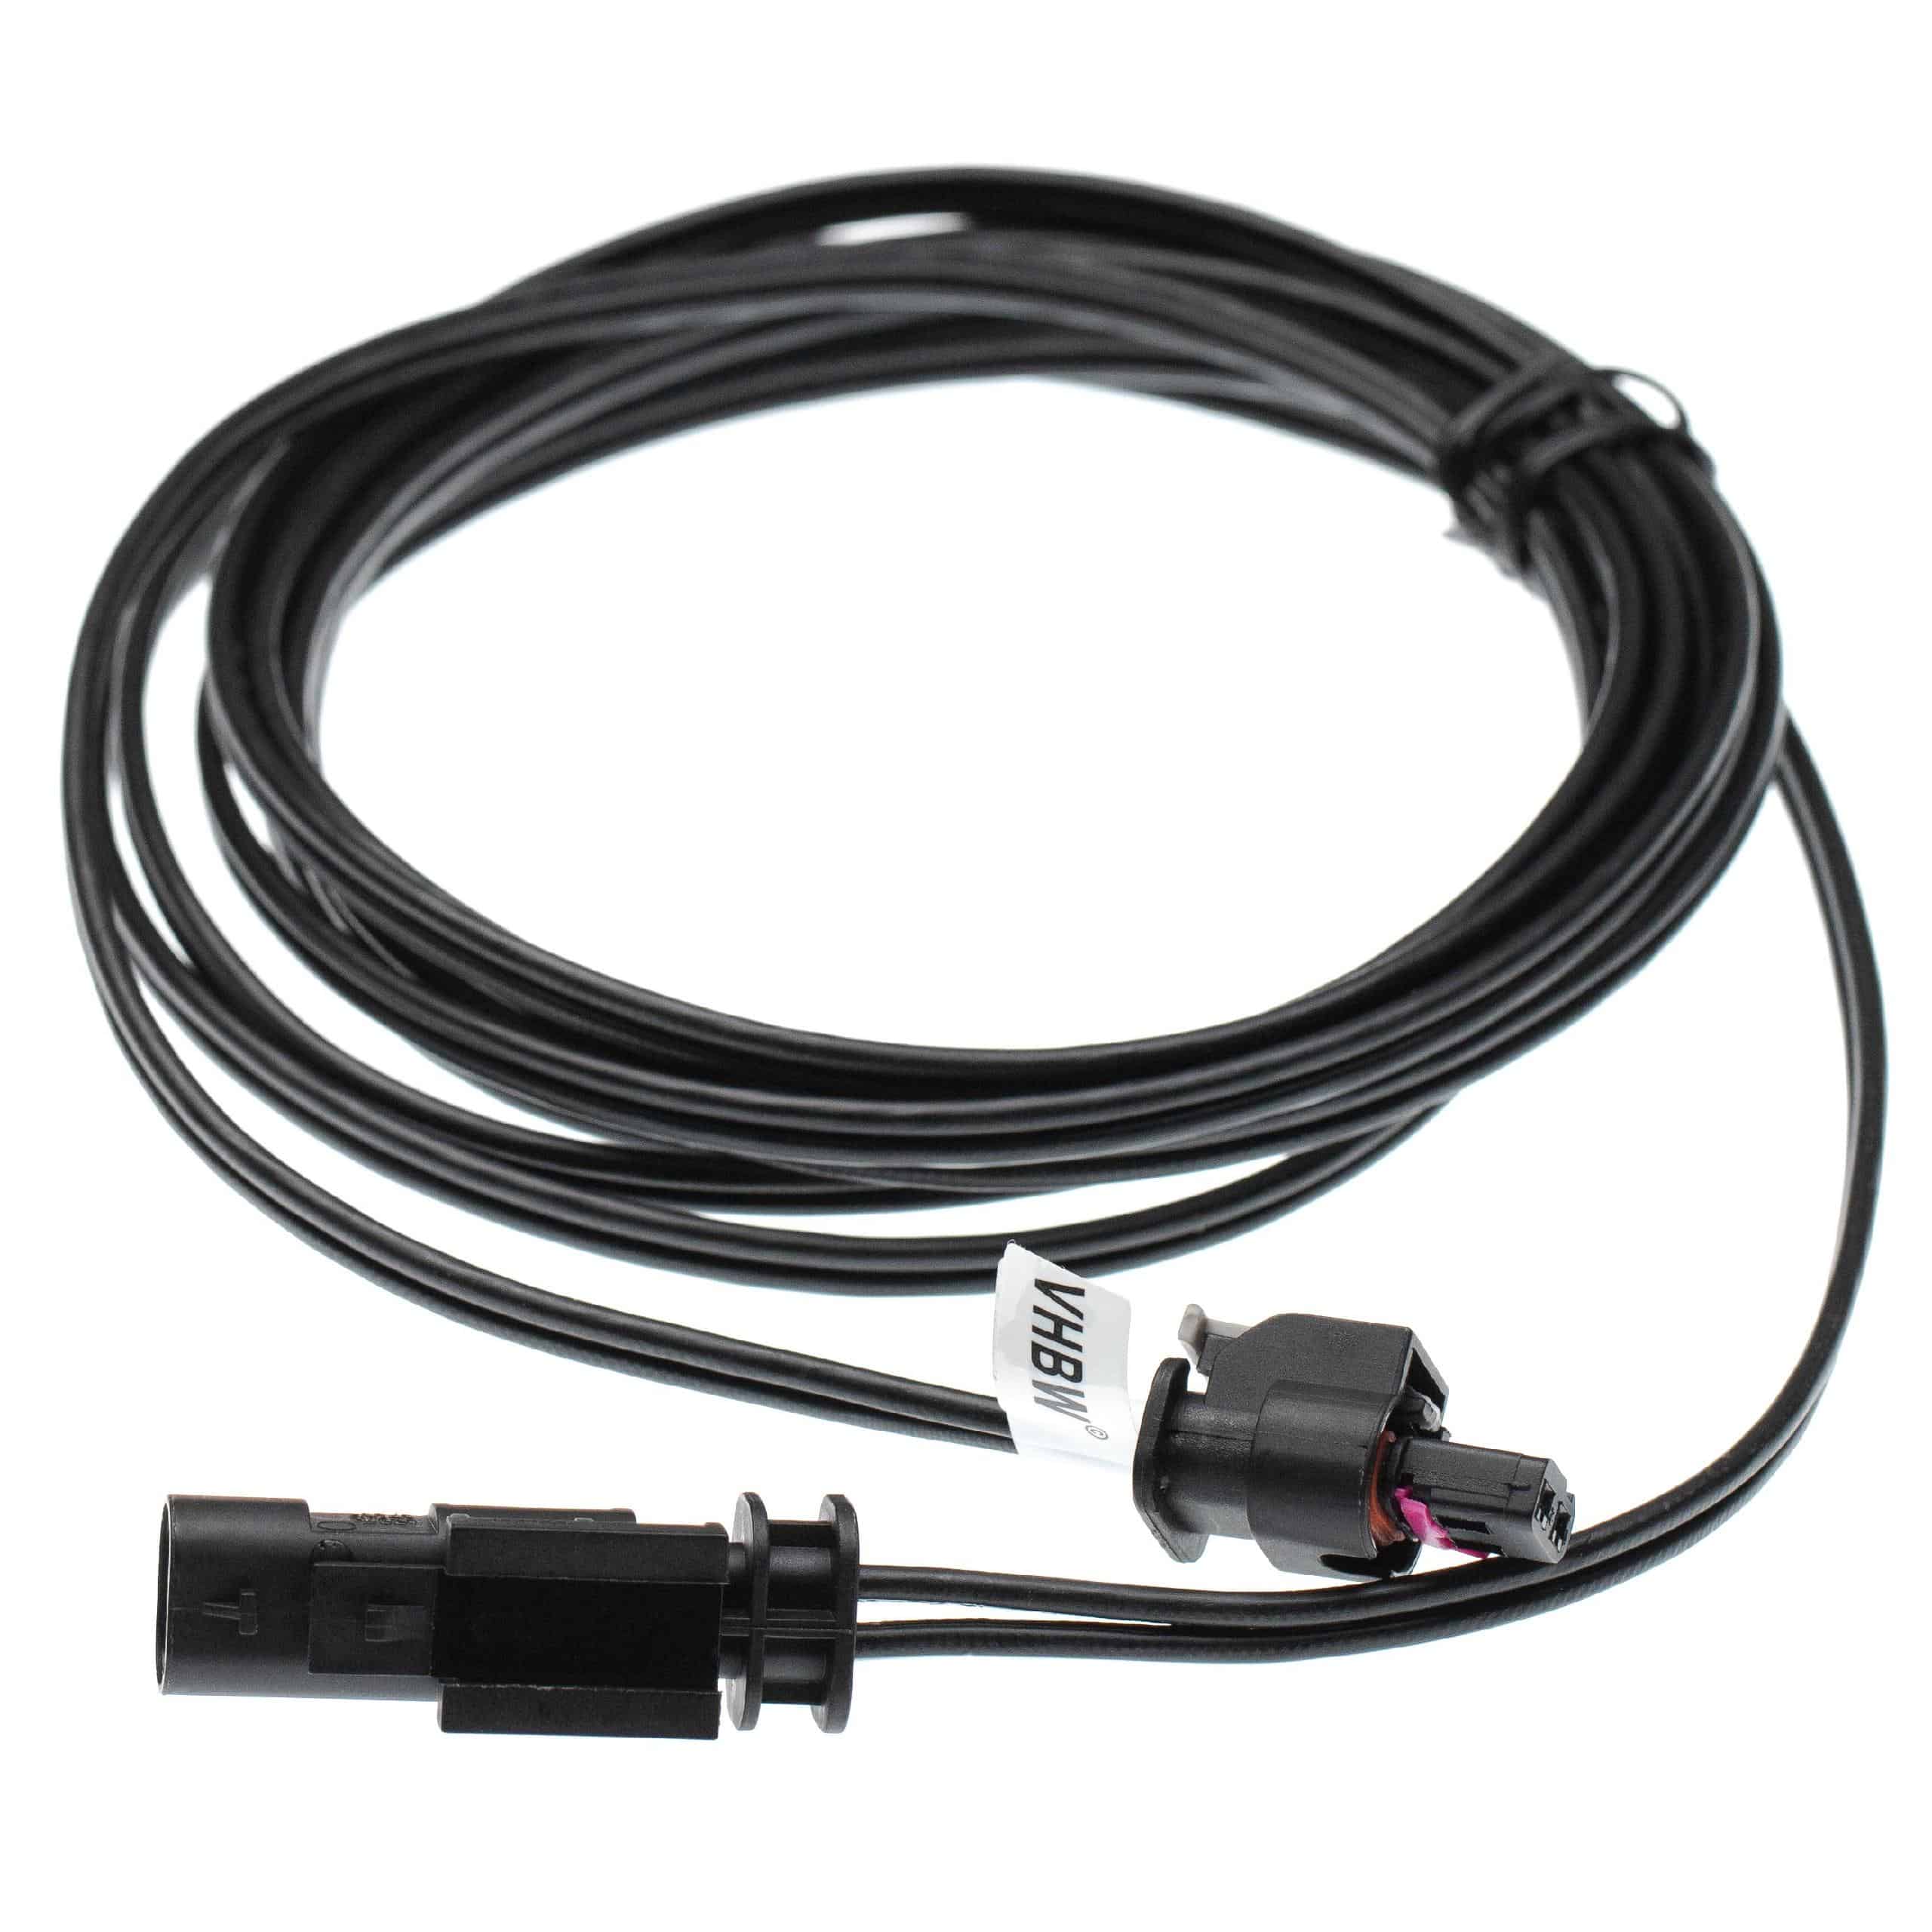 Low Voltage Cable replaces Husqvarna 581 16 66-01, 581 16 66-02 for HusqvarnaRobot Lawn Mower etc. 3 m